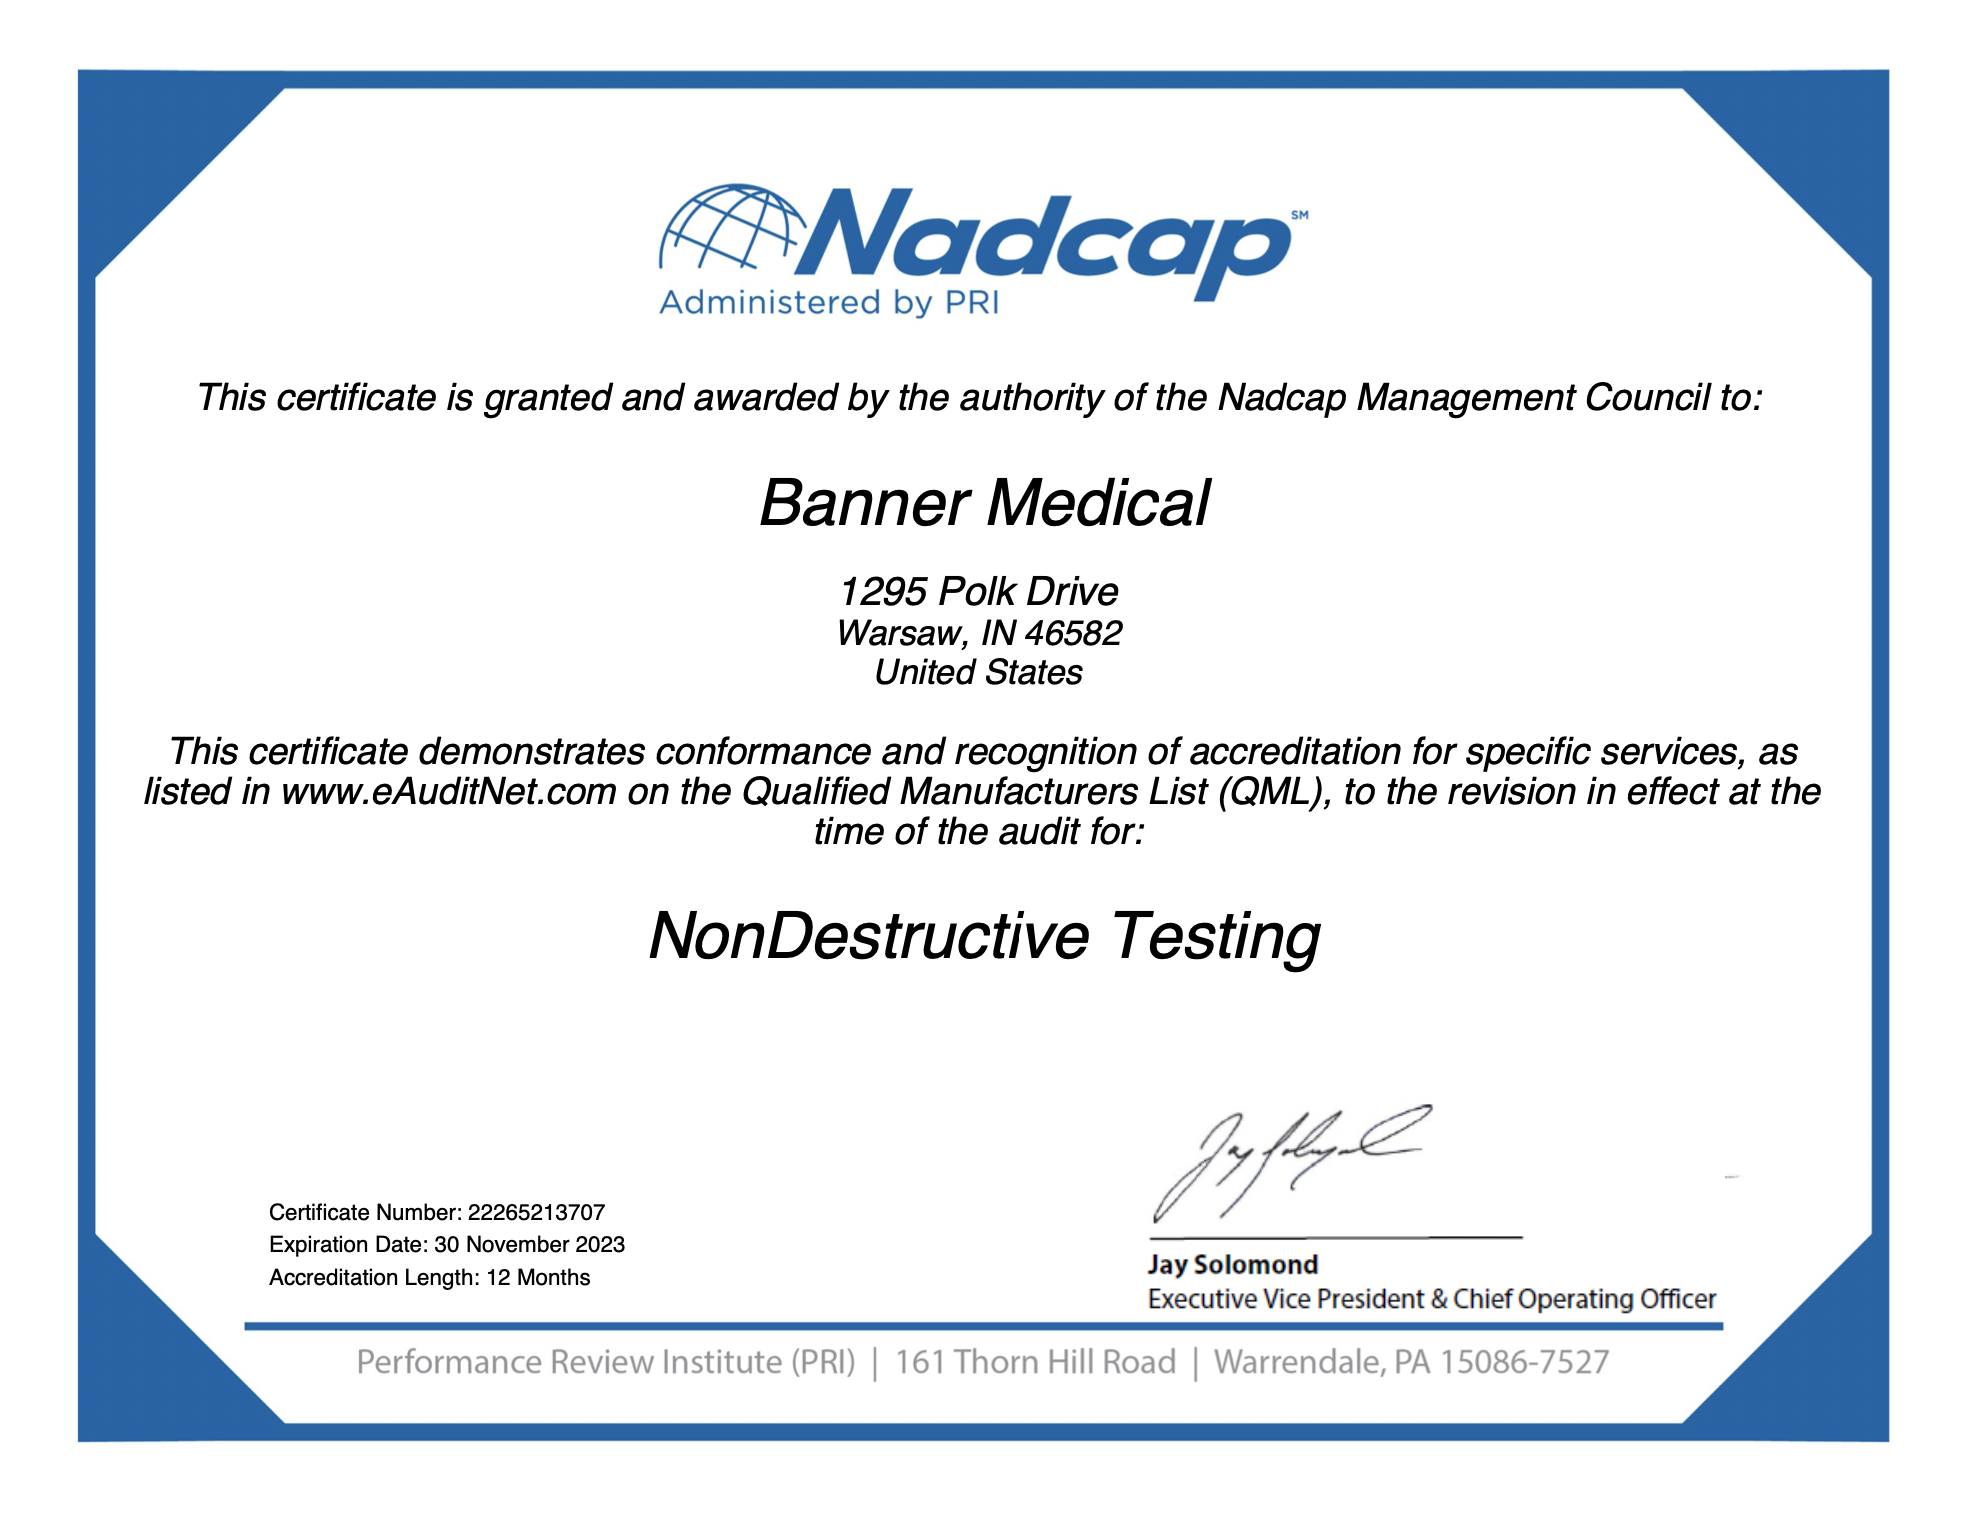 NADCAP certification